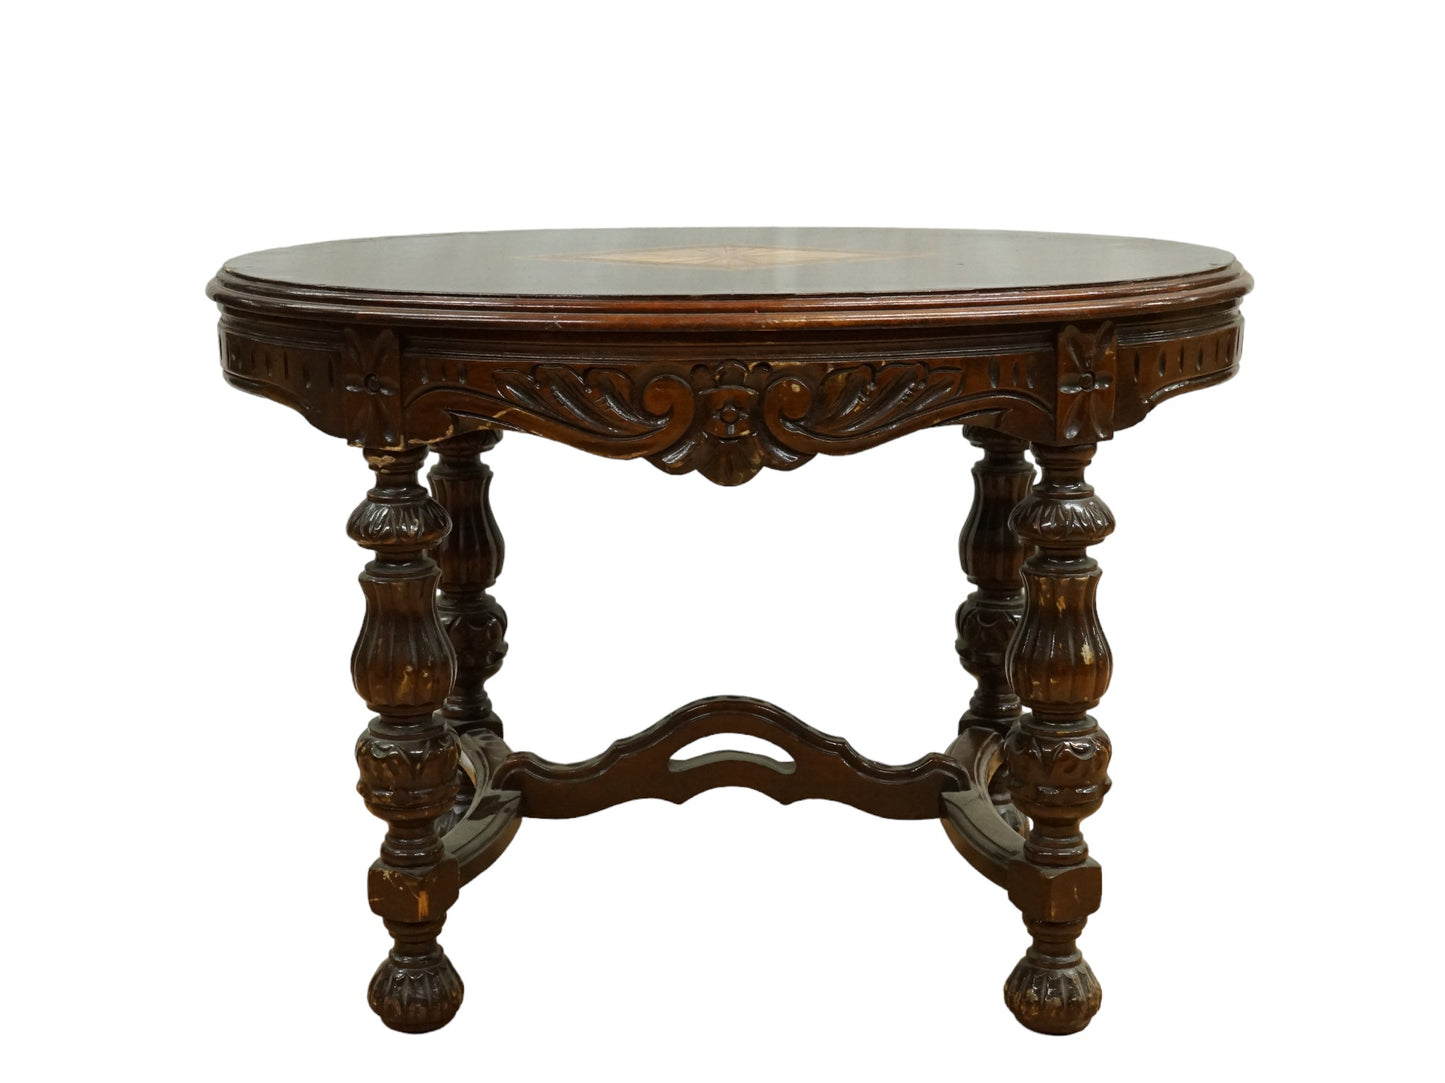 Fine French Renaissance style Revival Oval Oak Table